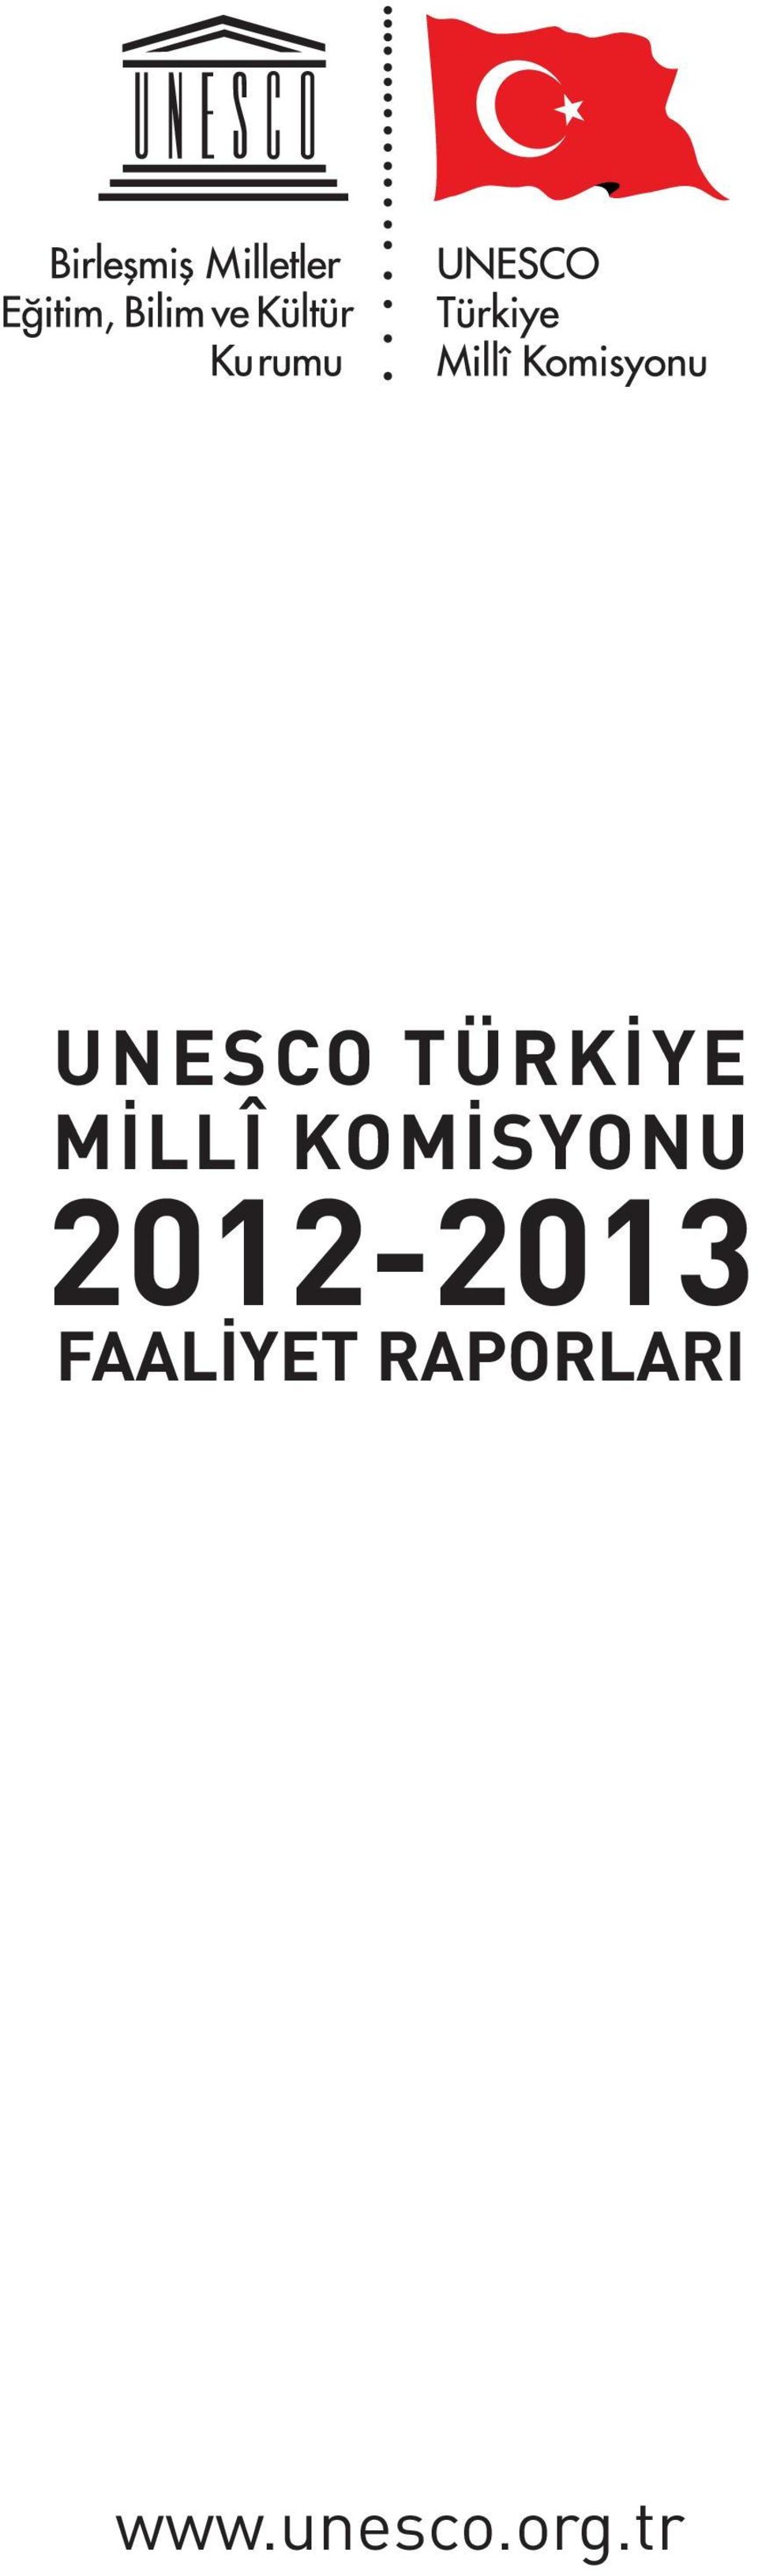 2012-2013 FAALİYET